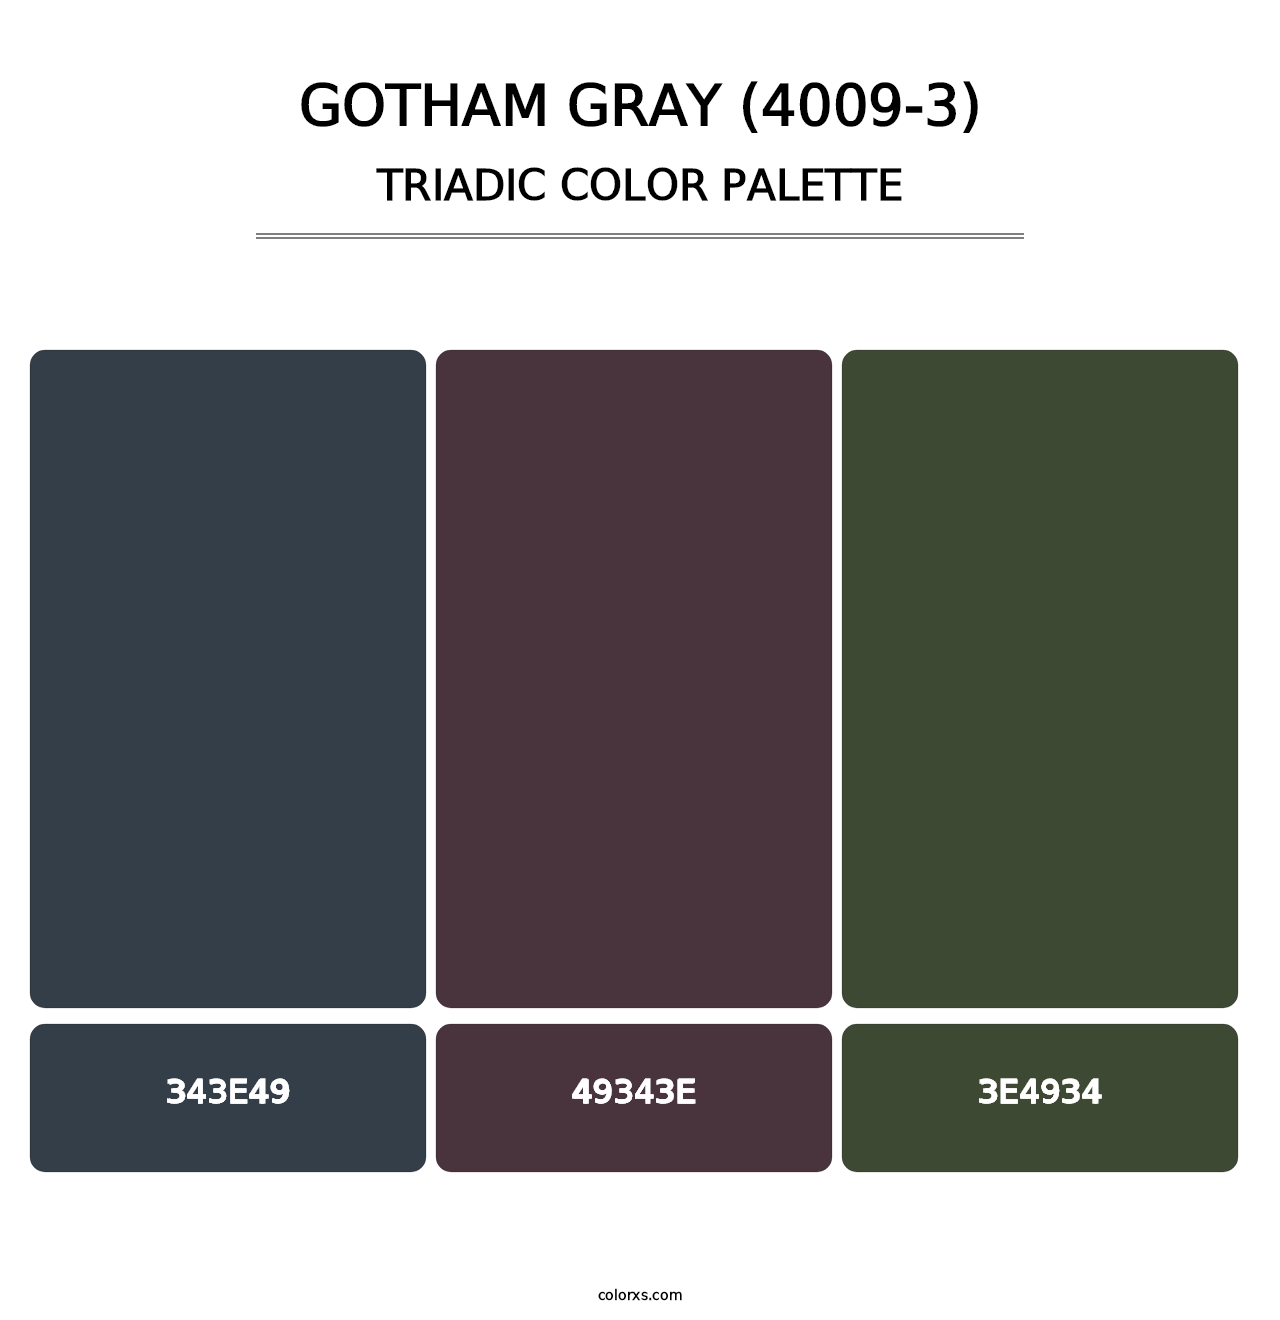 Gotham Gray (4009-3) - Triadic Color Palette